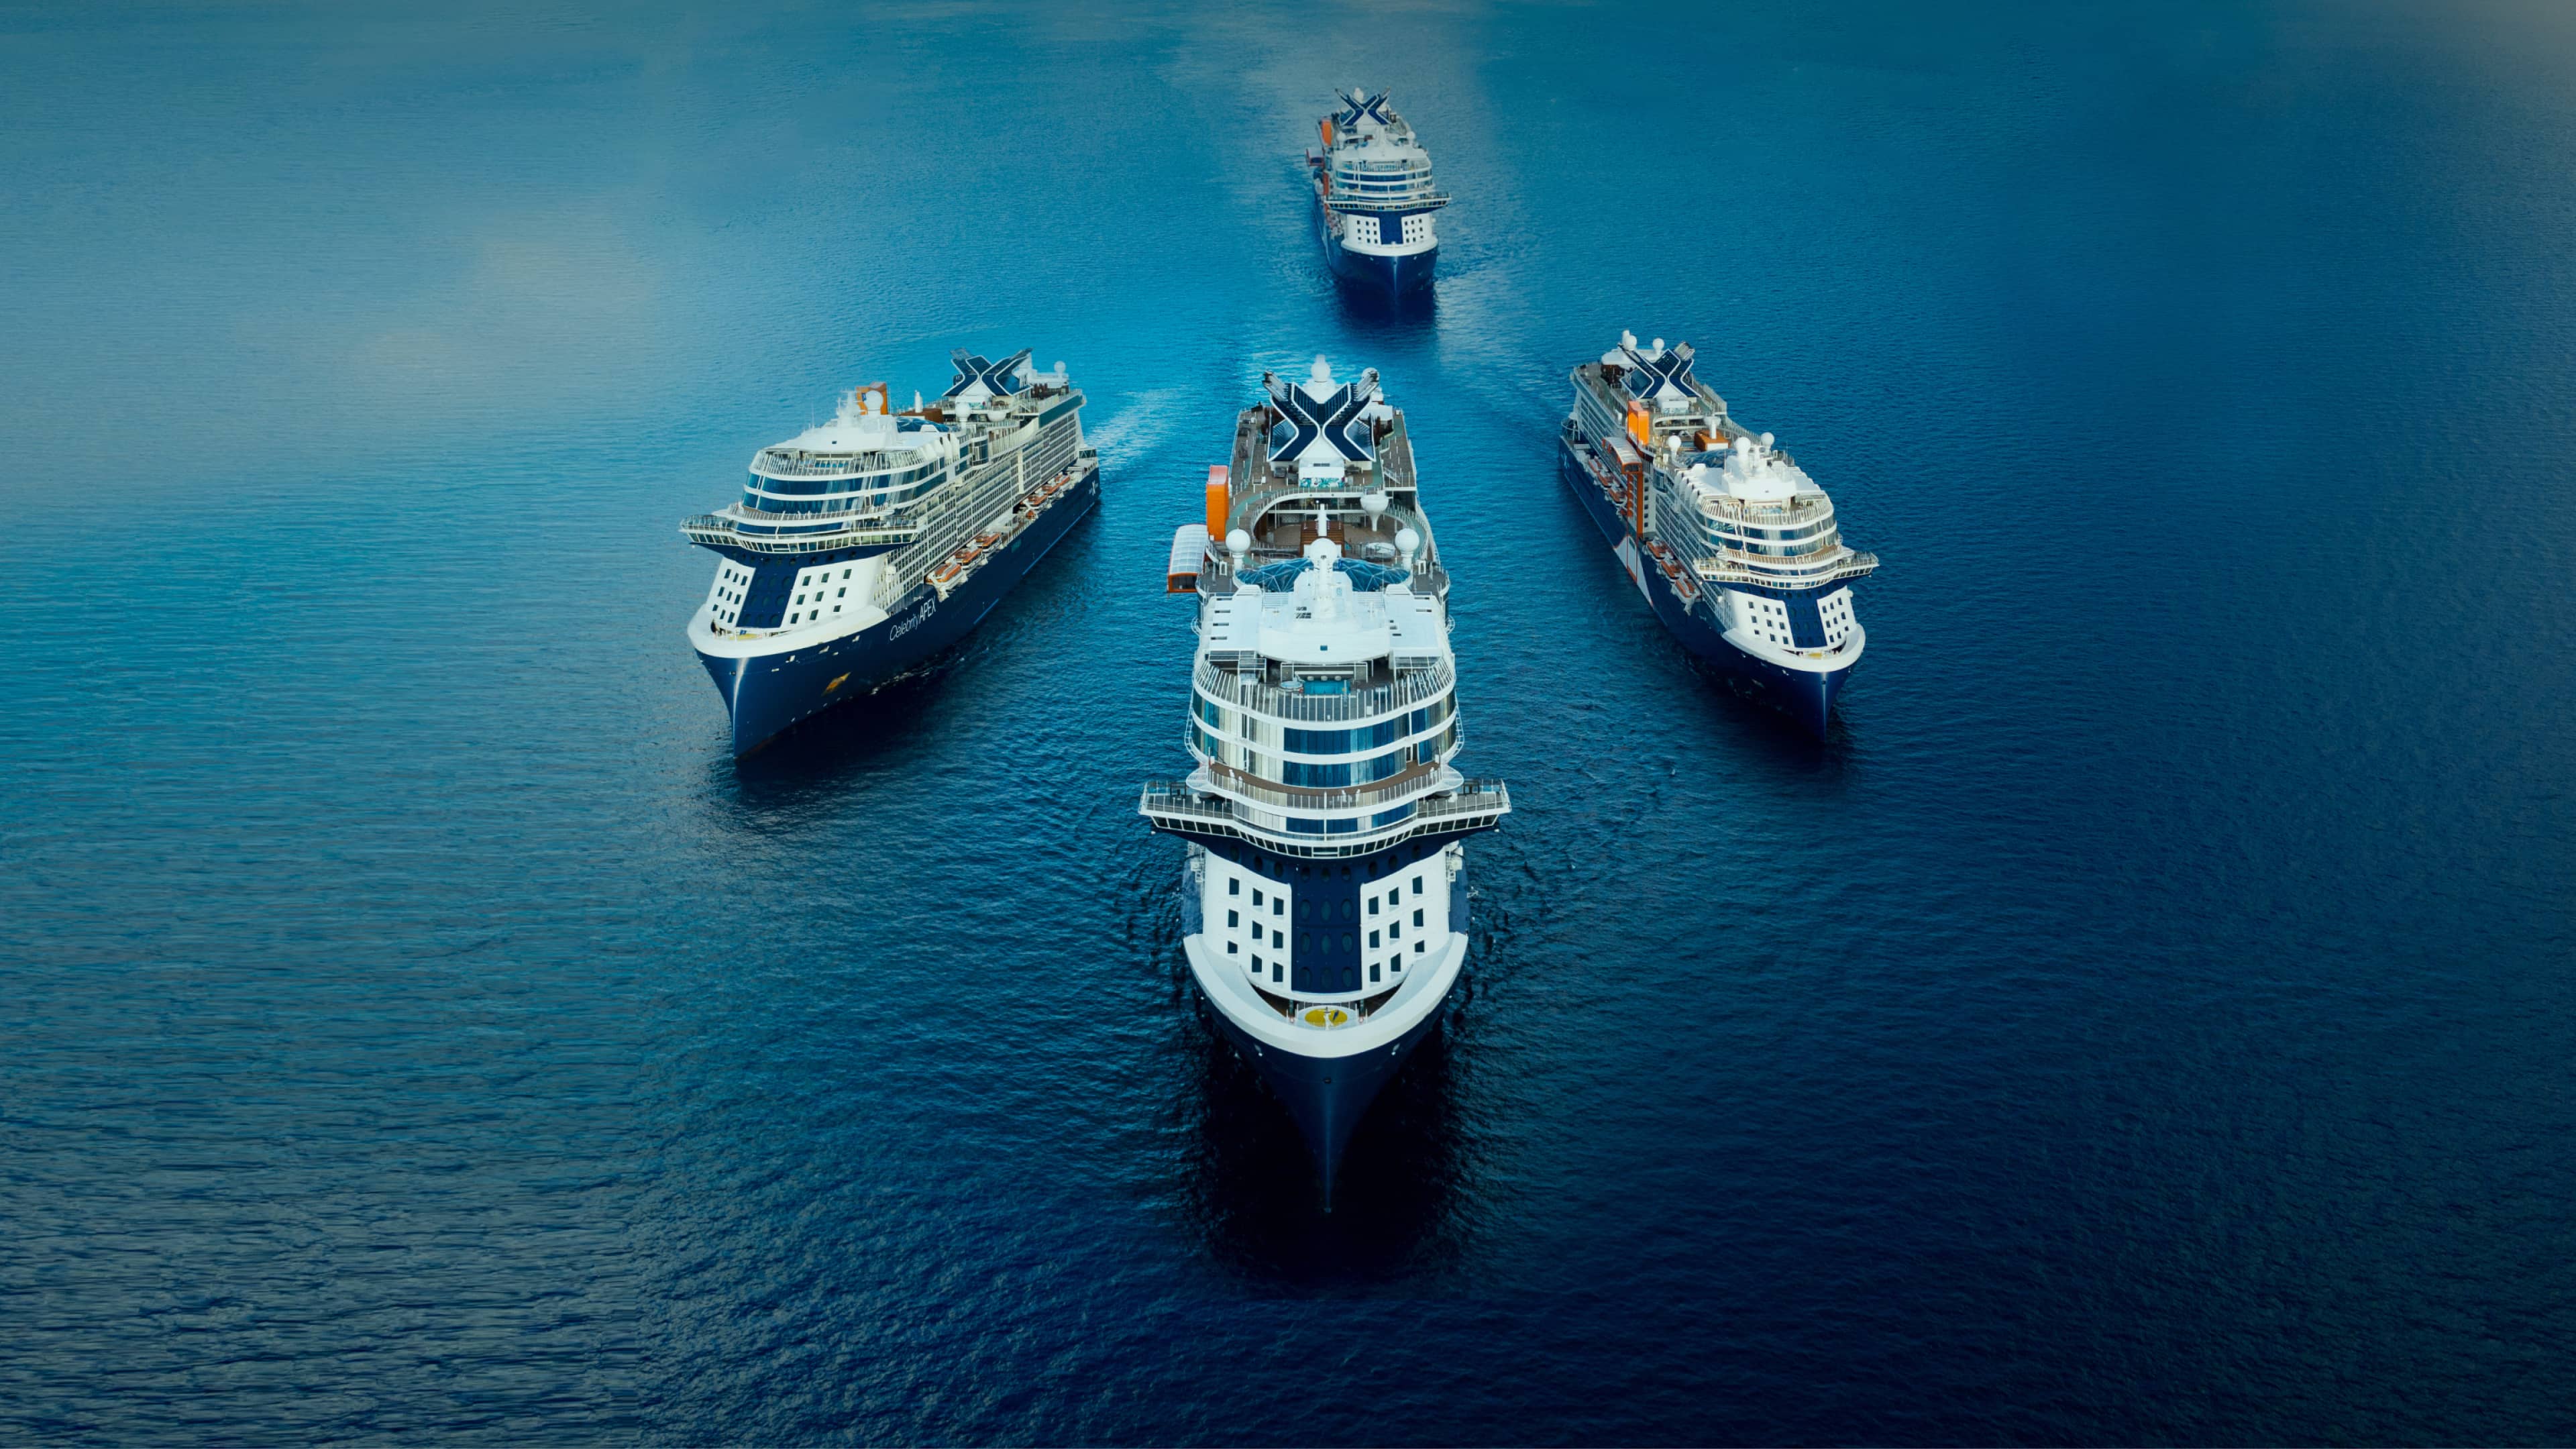 celebrity cruises edge class ships